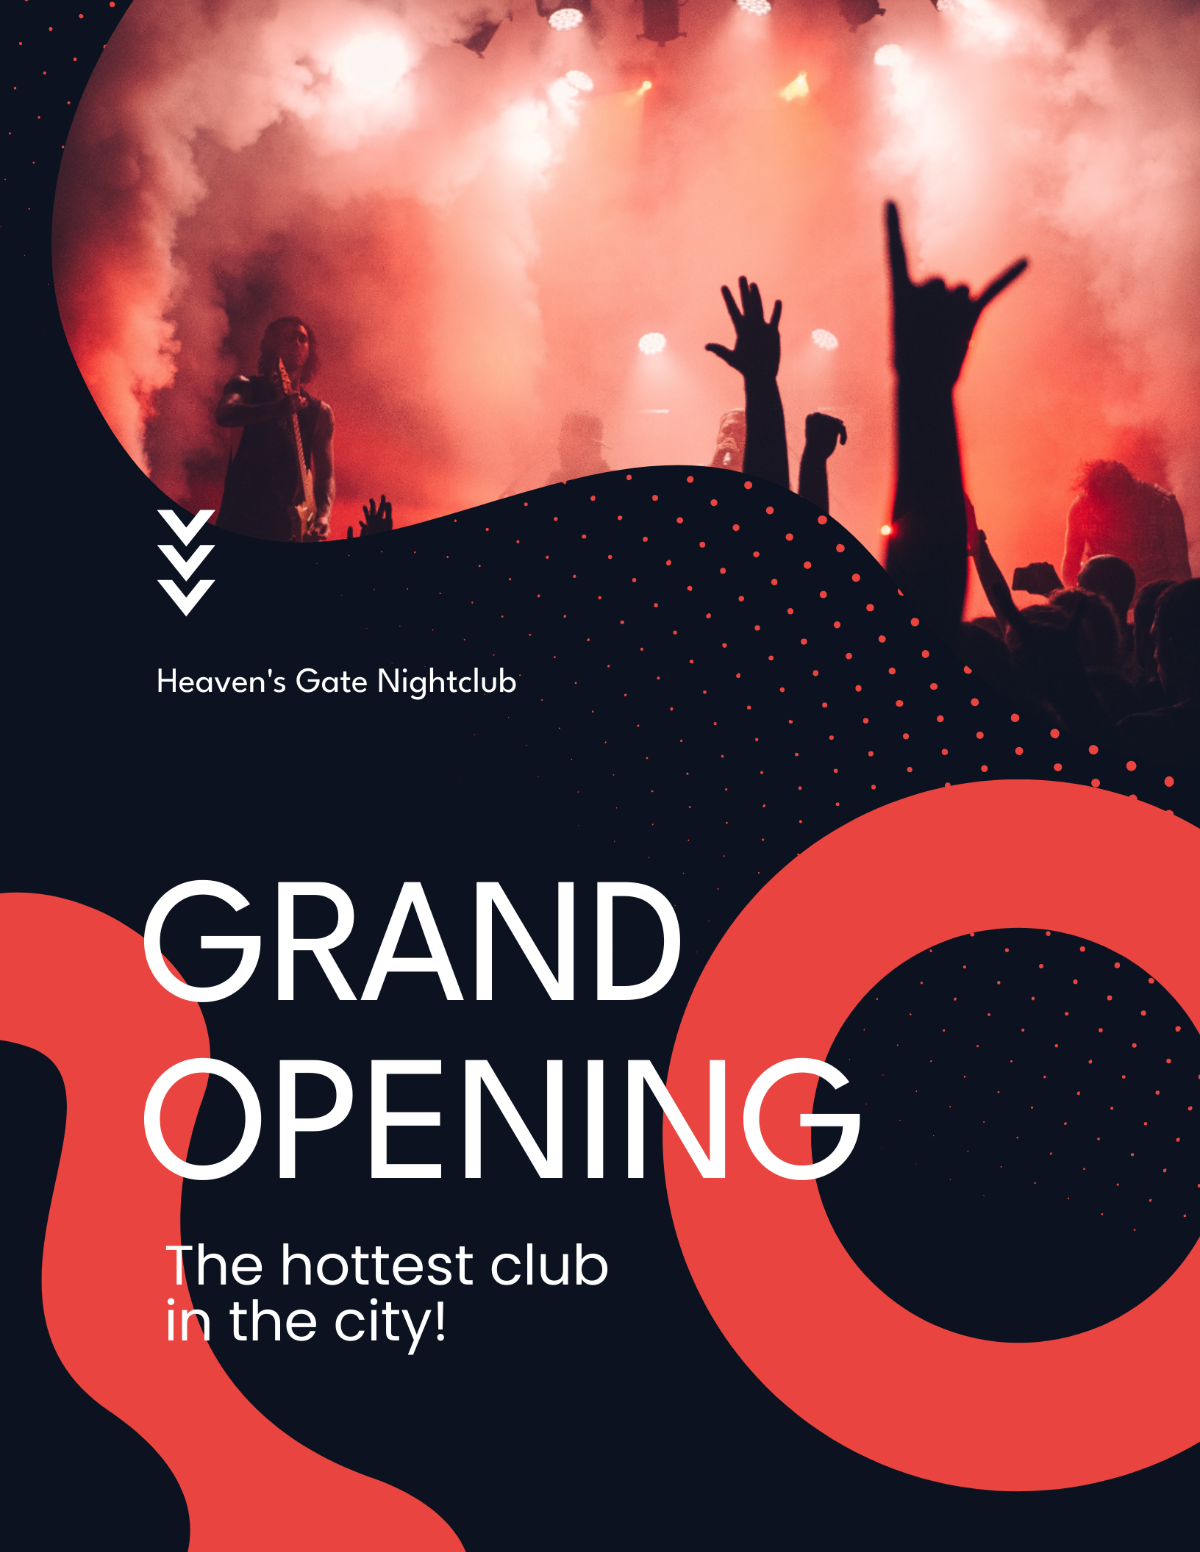 Night Club Grand Opening Flyer